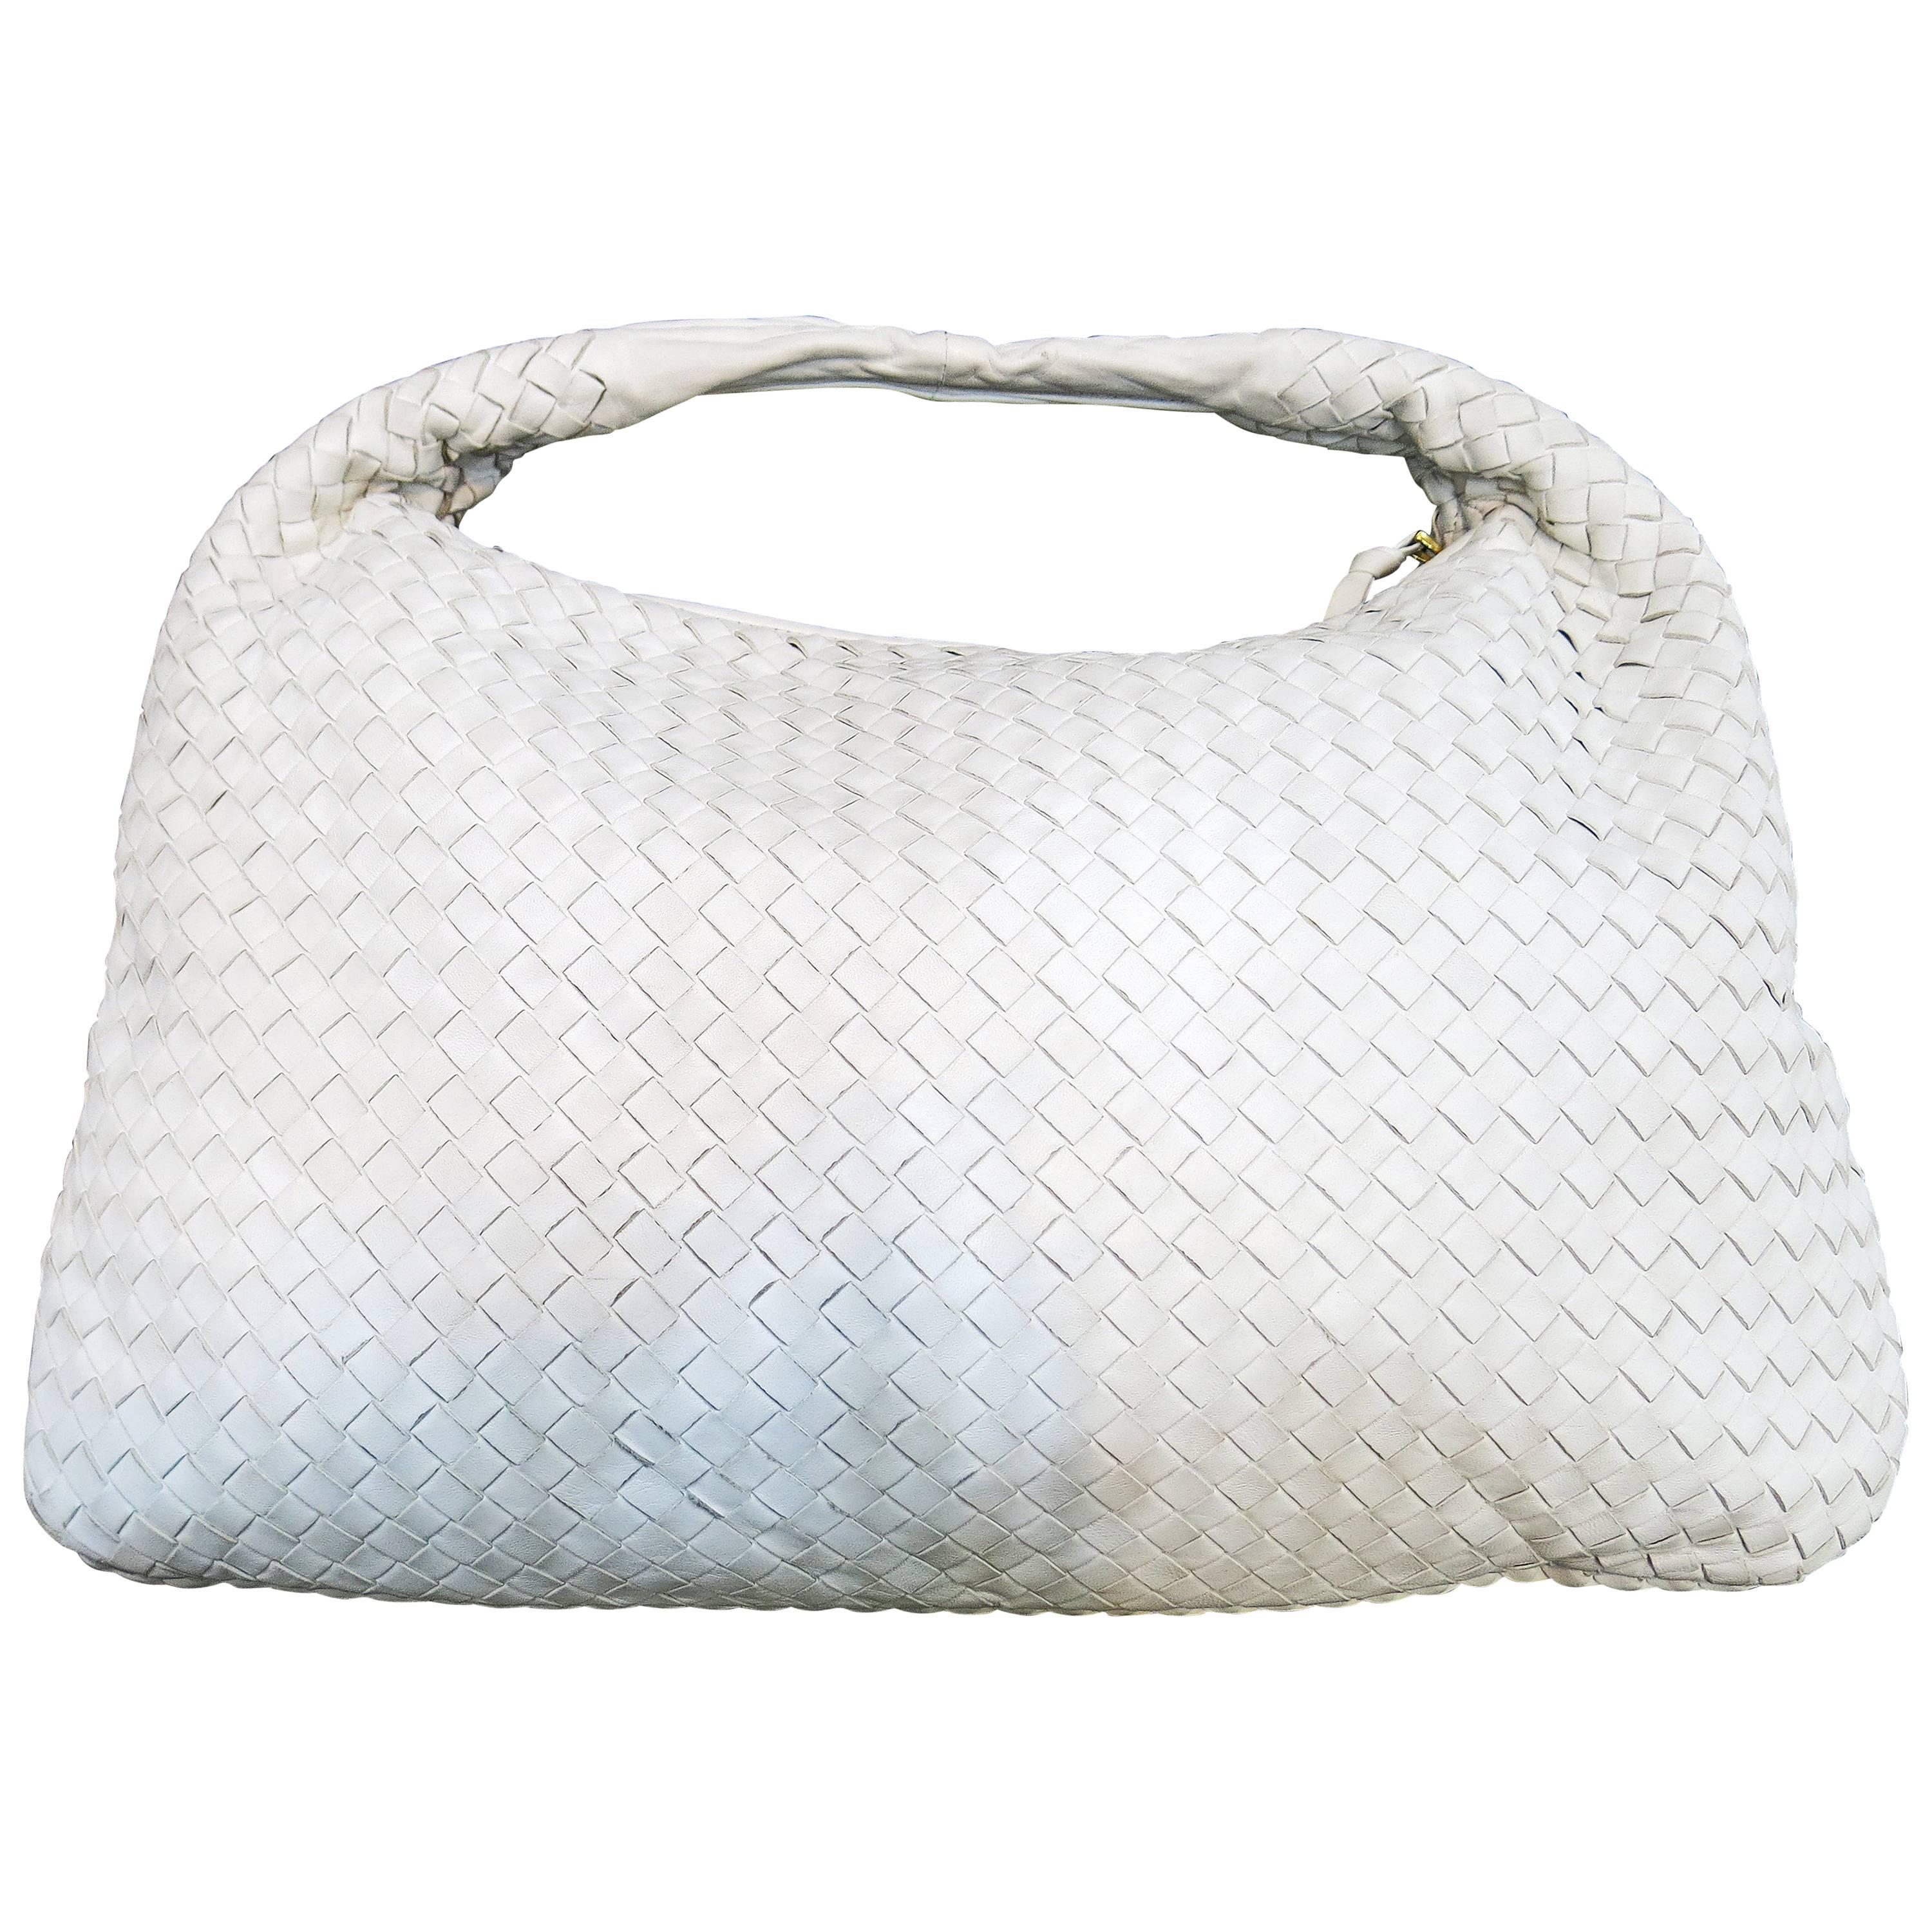 Early 2000's Bottega Veneta White Woven Leather Shoulder Bag